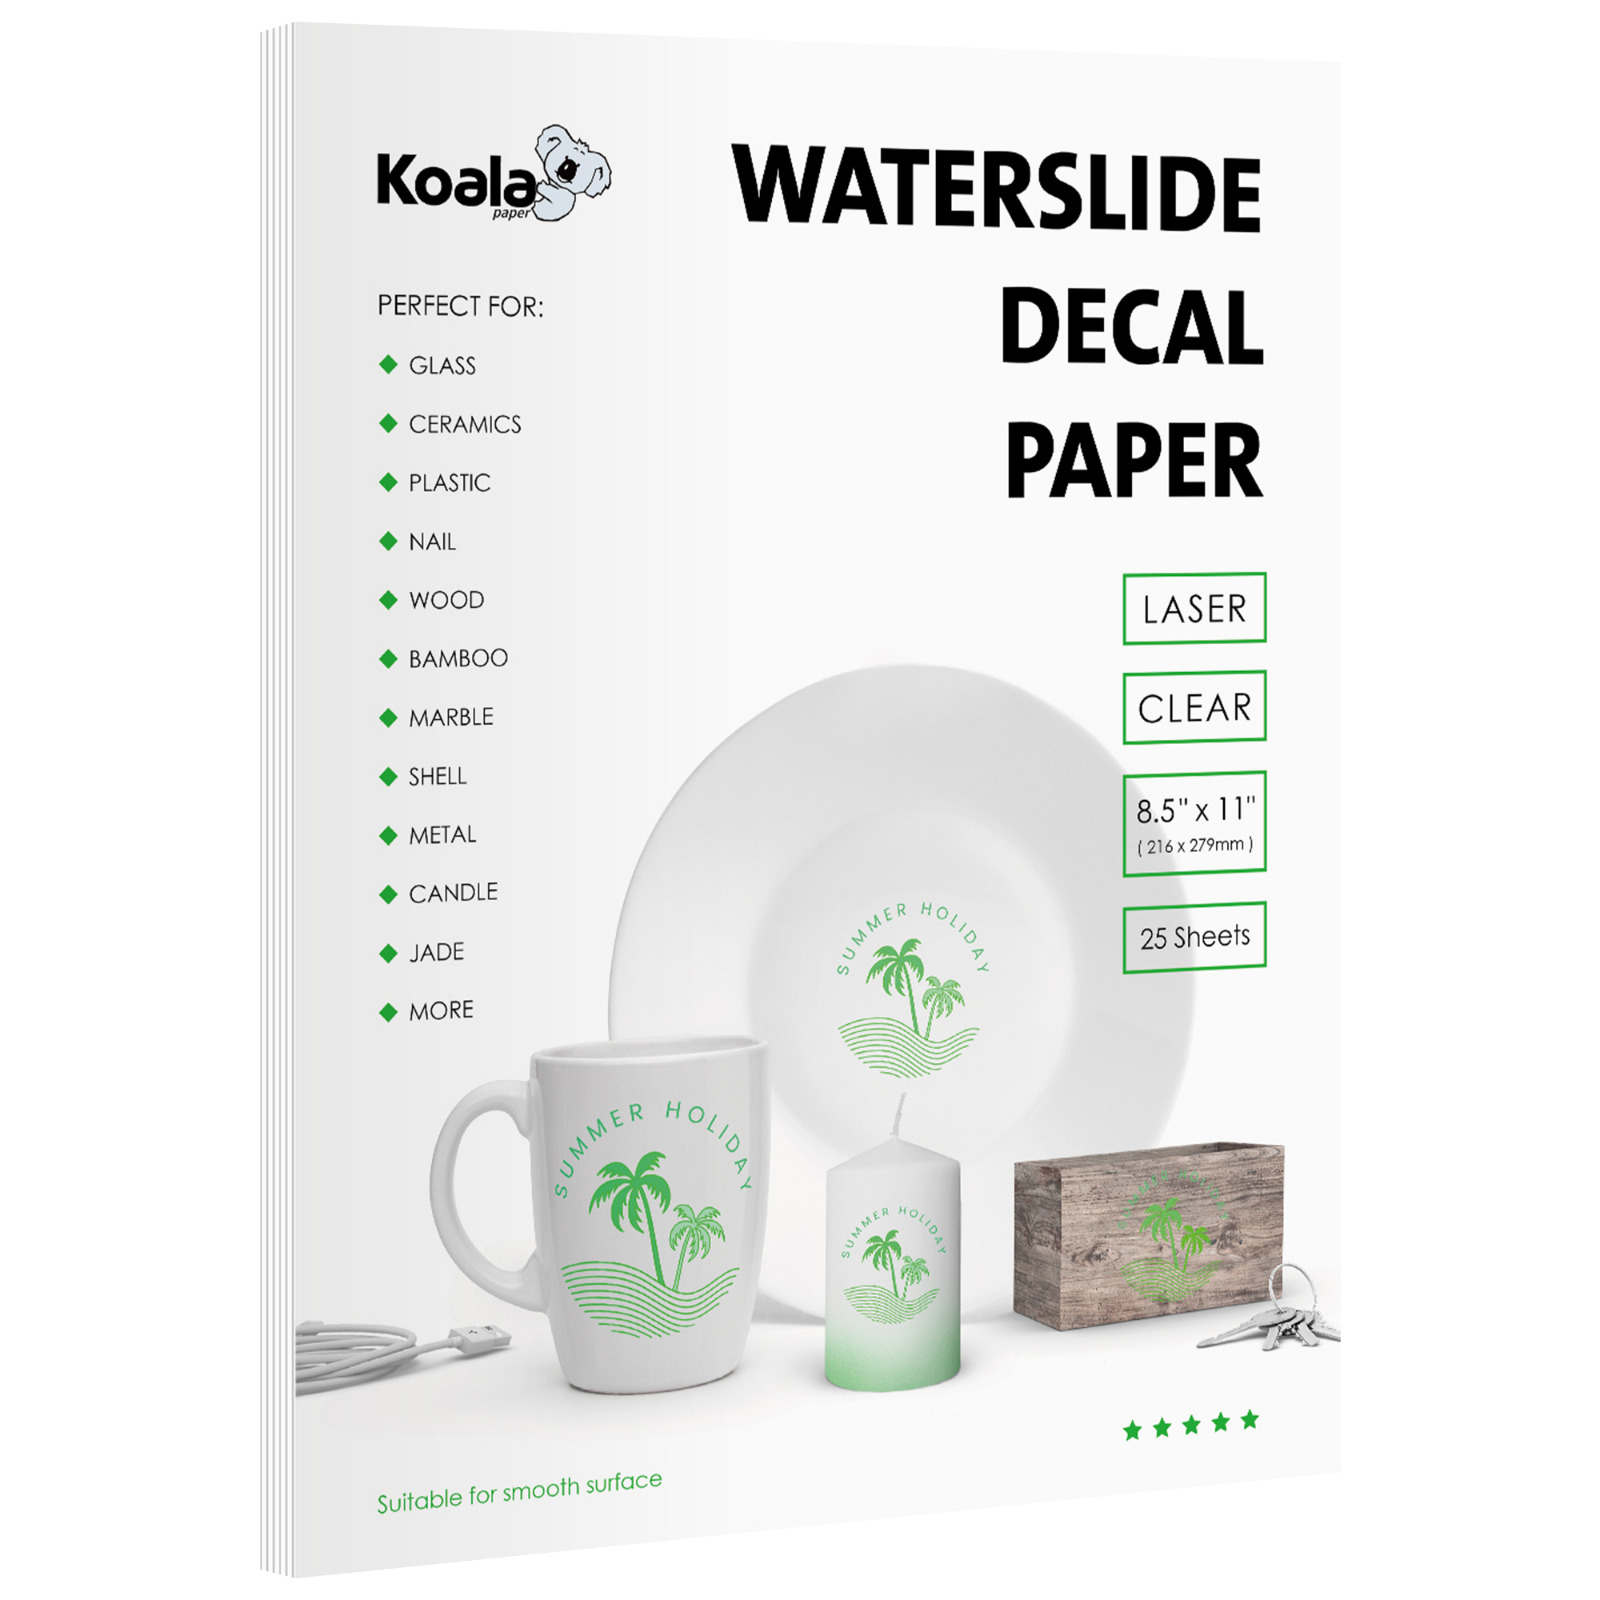 Koala Premium CLEAR Waterslide Decal Paper LASER 25 Sheets Water Slide Transfer